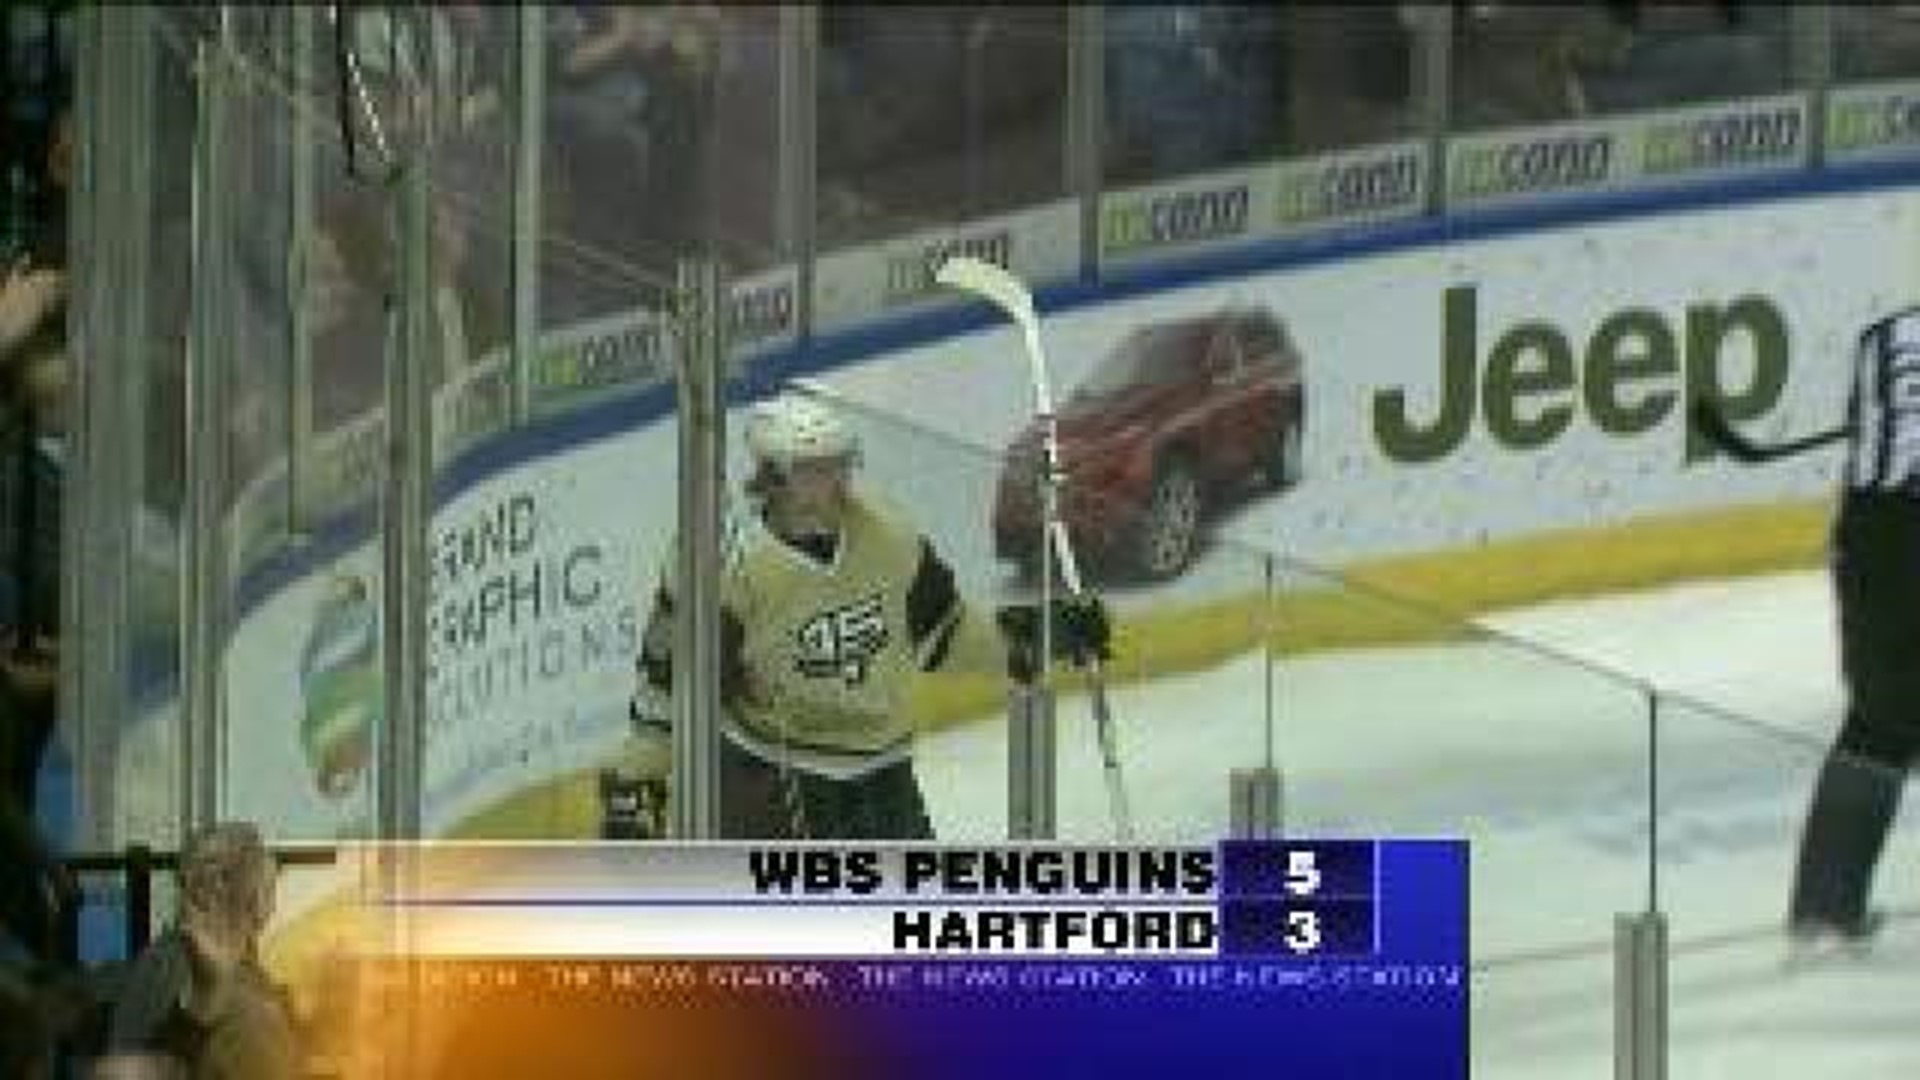 WBS Penguins beat Hartford 5-3